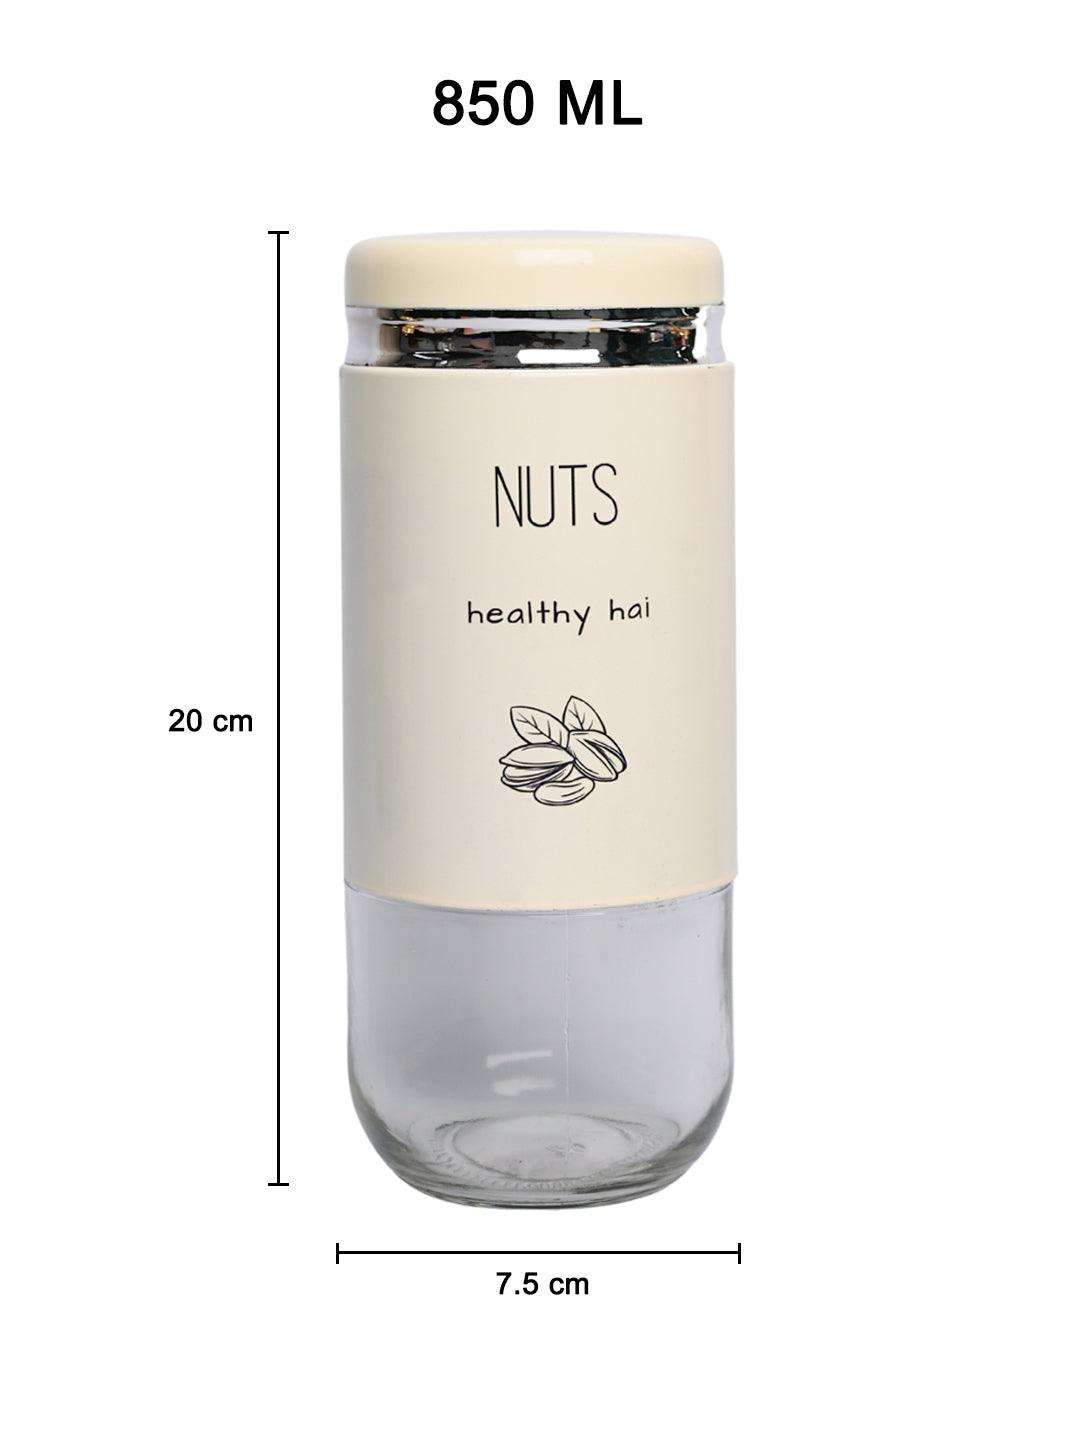 Nuts Storage Jar 850 Ml - MARKET99